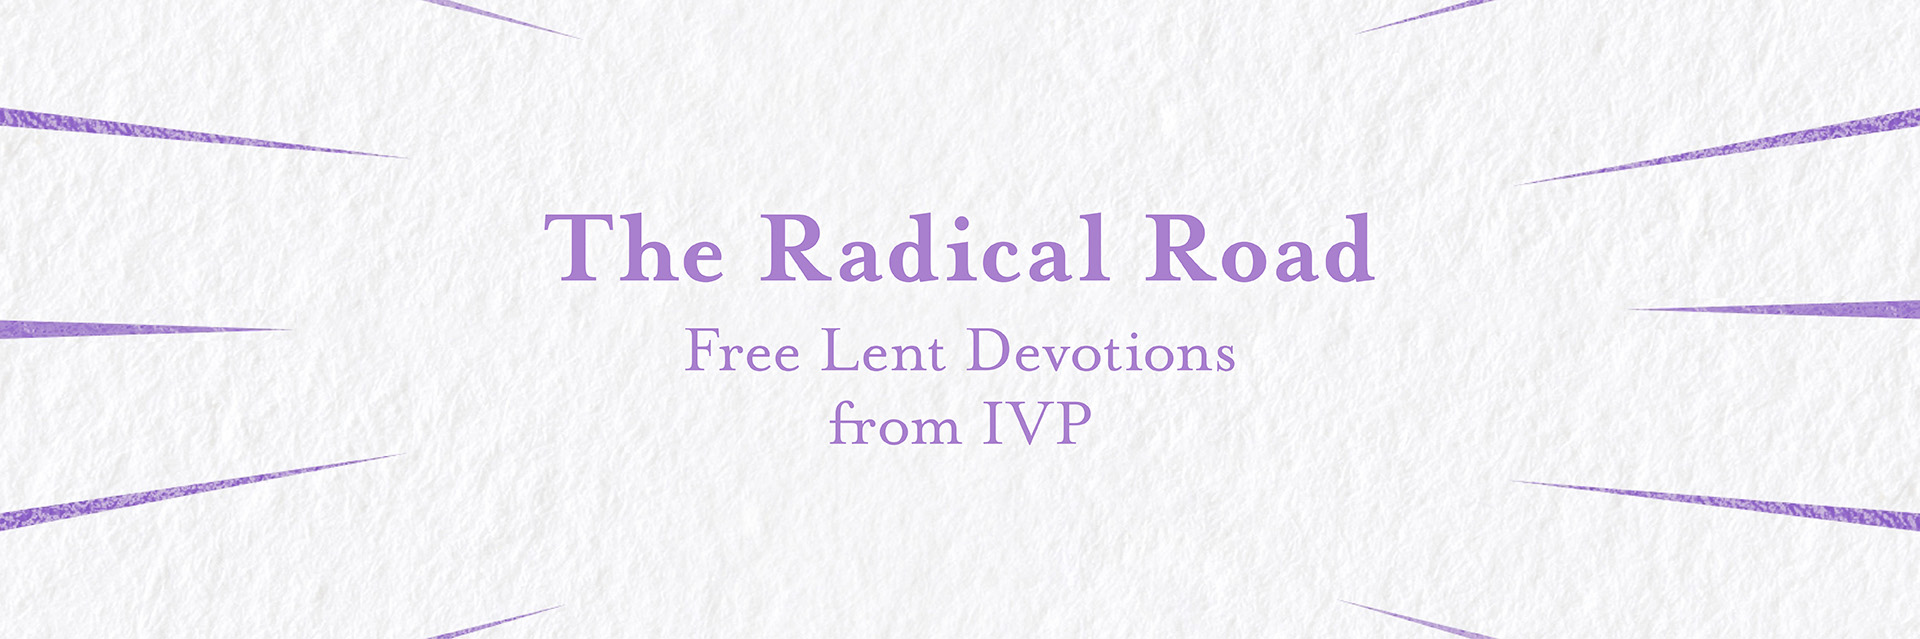 The Radical Road: Free Lent Devotions